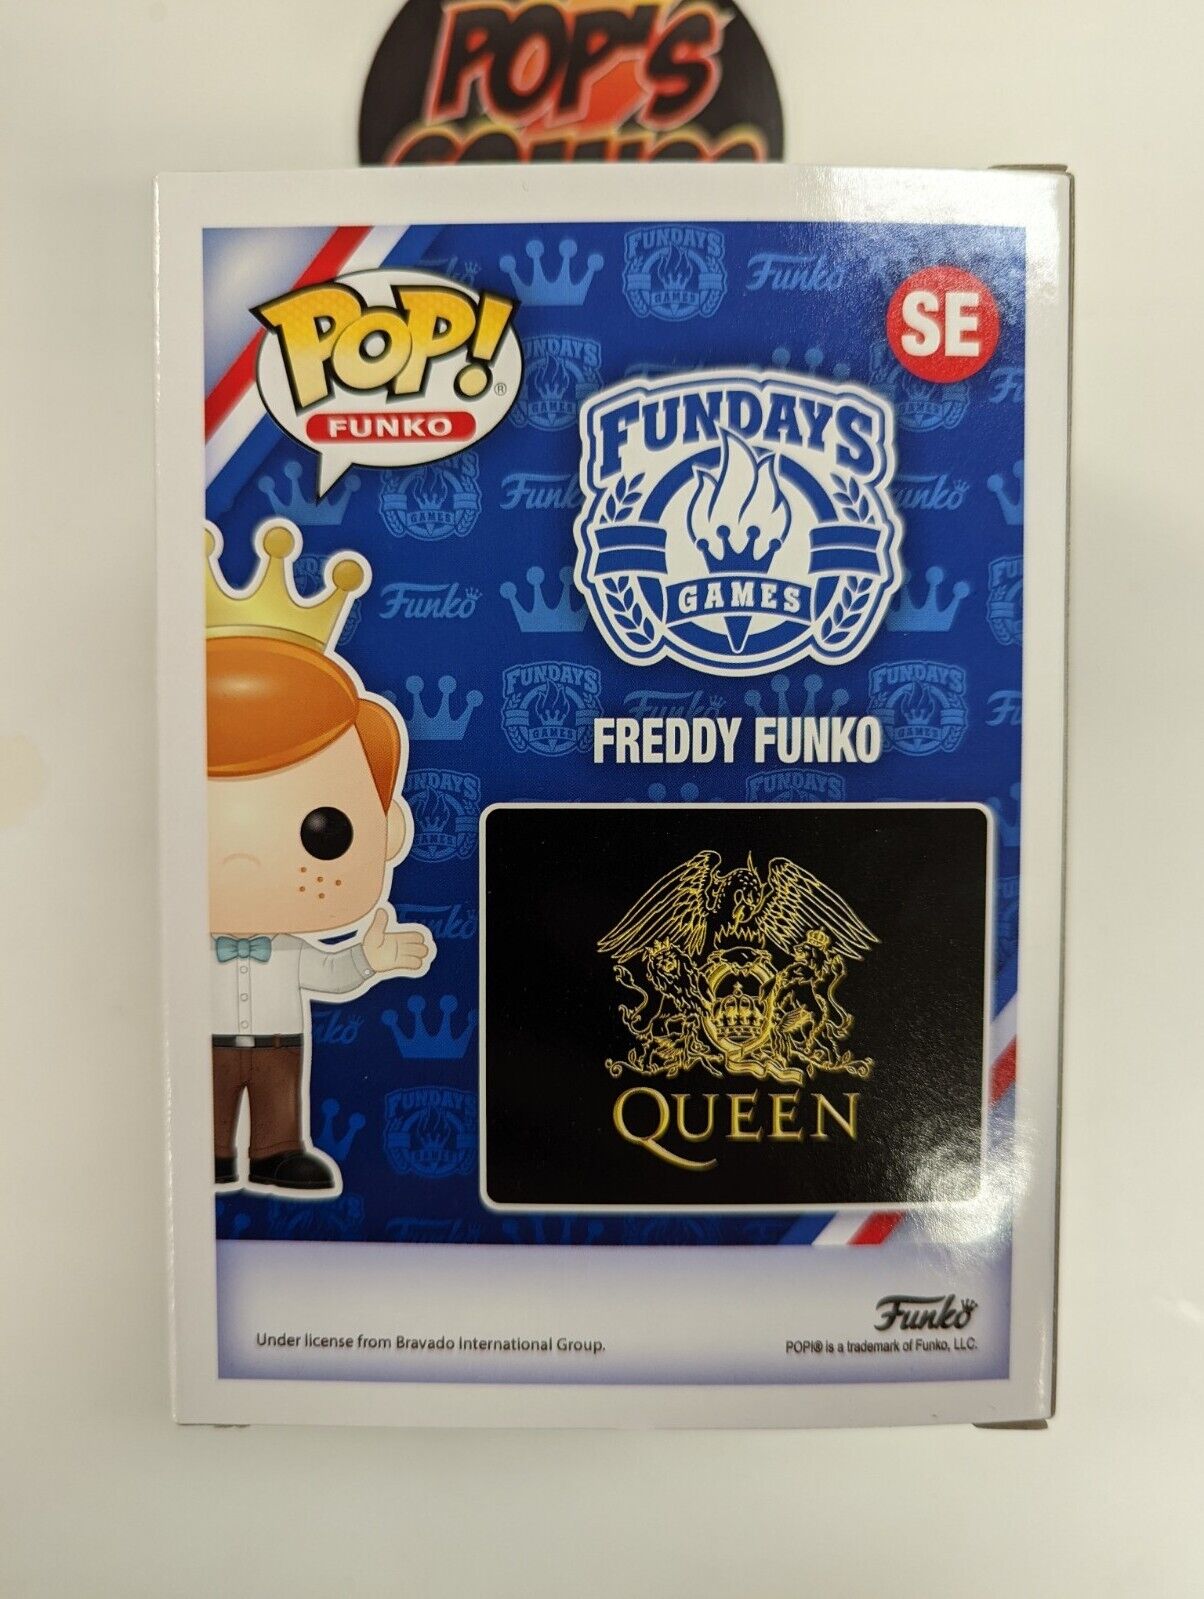 Funko Pop Freddy Funko As Freddie Mercury SE Box Of Fun 3000 Pcs